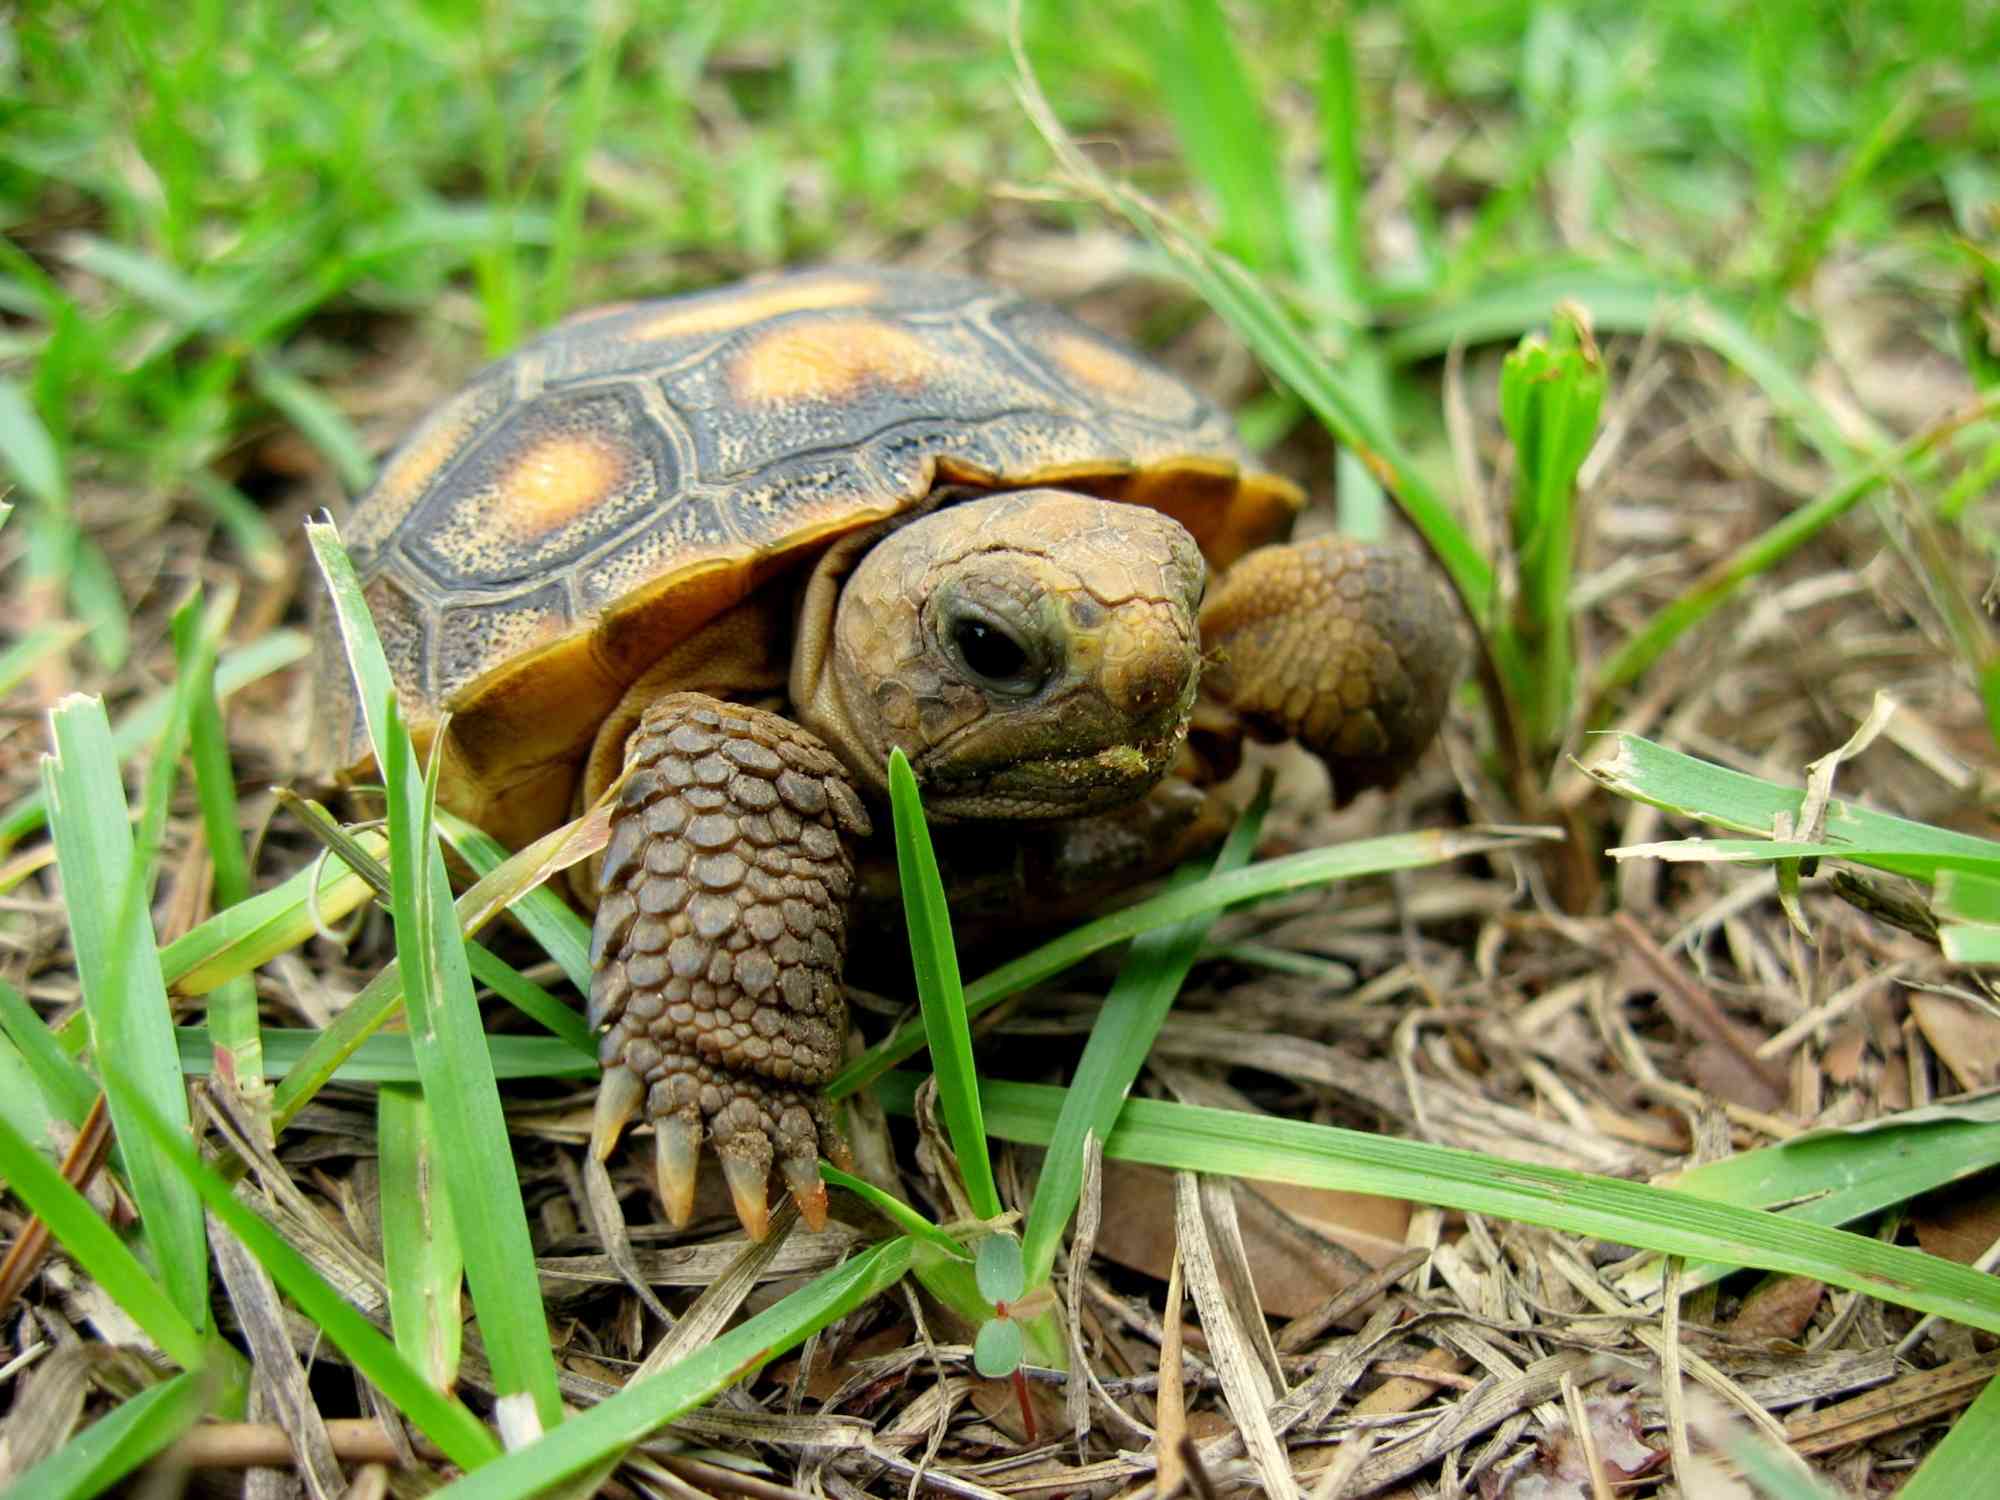 Juvenile Gopher Tortoise